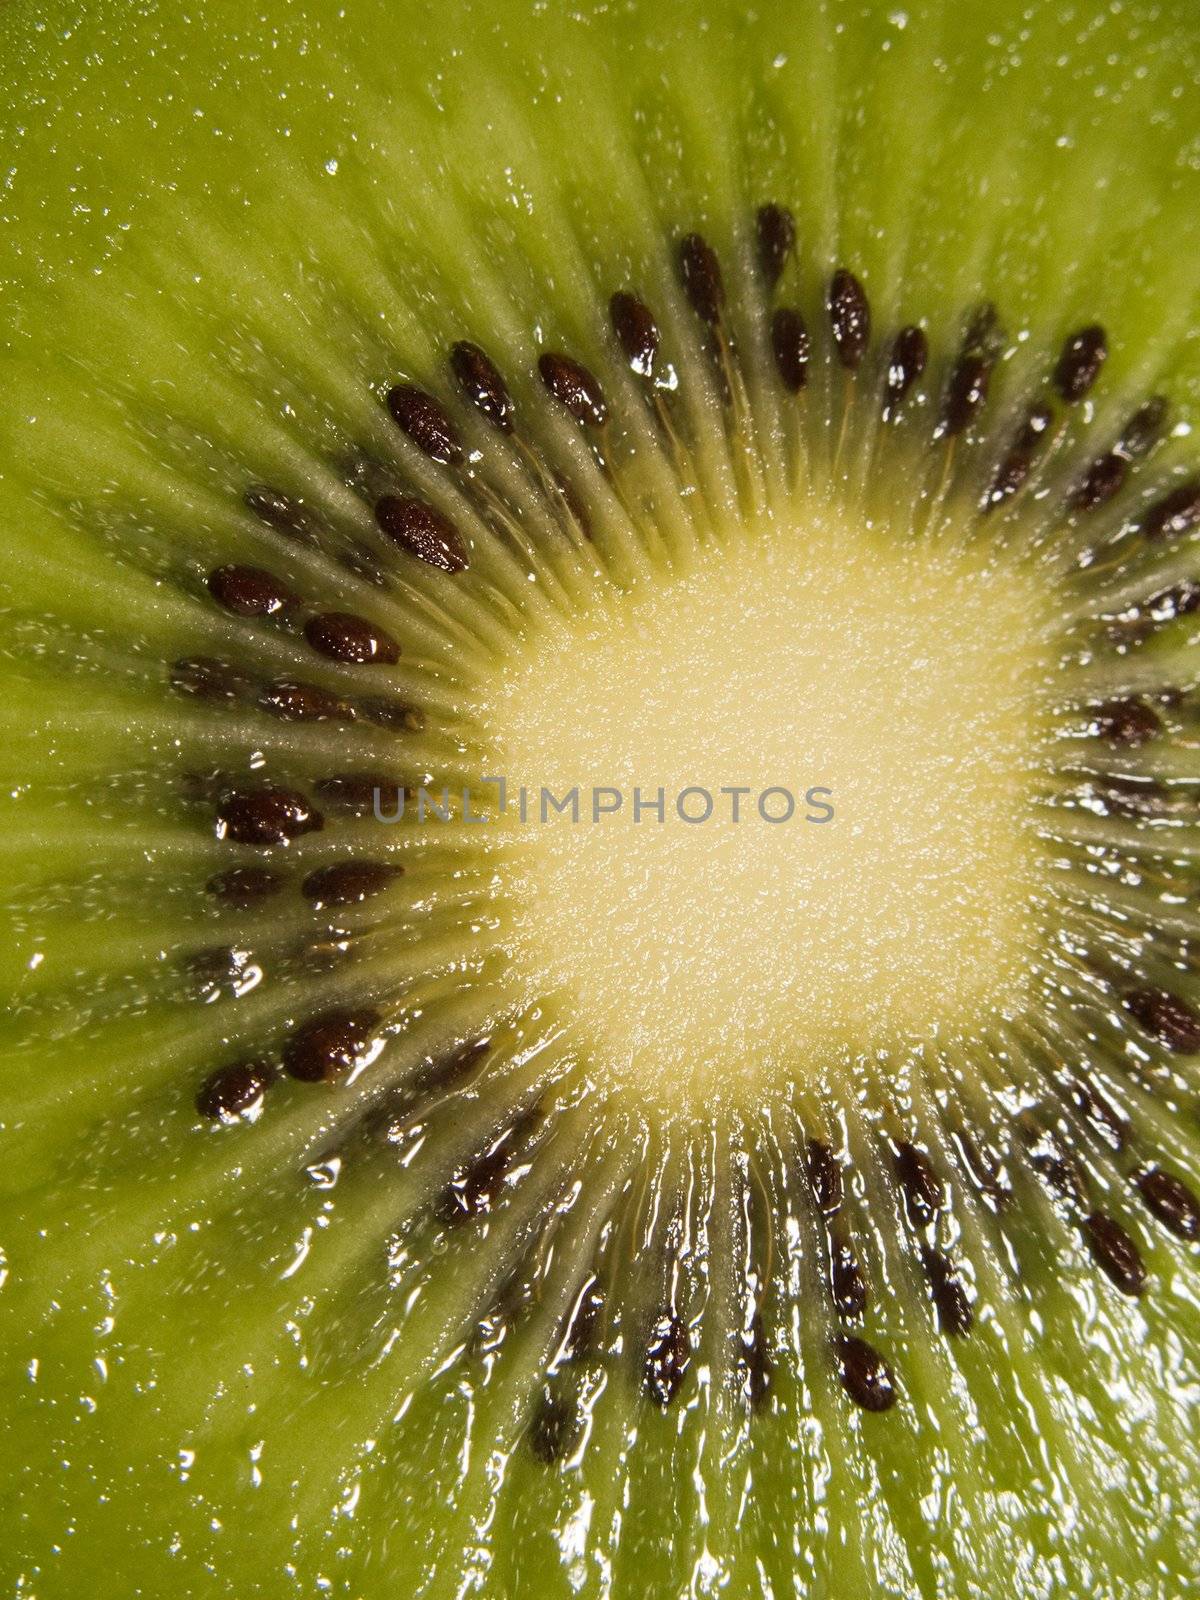 Tropical food - green ripe healthy kiwi fruit